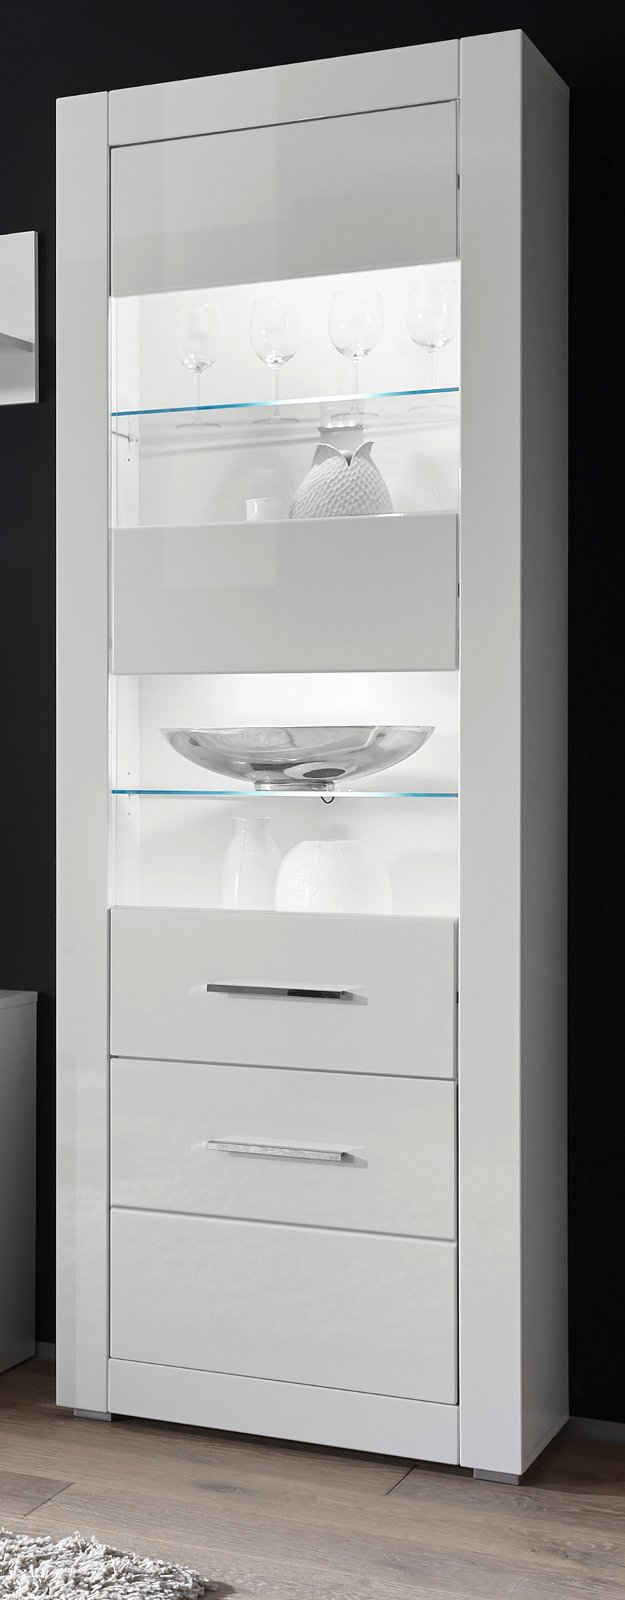 Furn.Design Stauraumvitrine Carrara (Standvitrine in weiß, 2-türig, 65 x 198 cm) Hochglanz